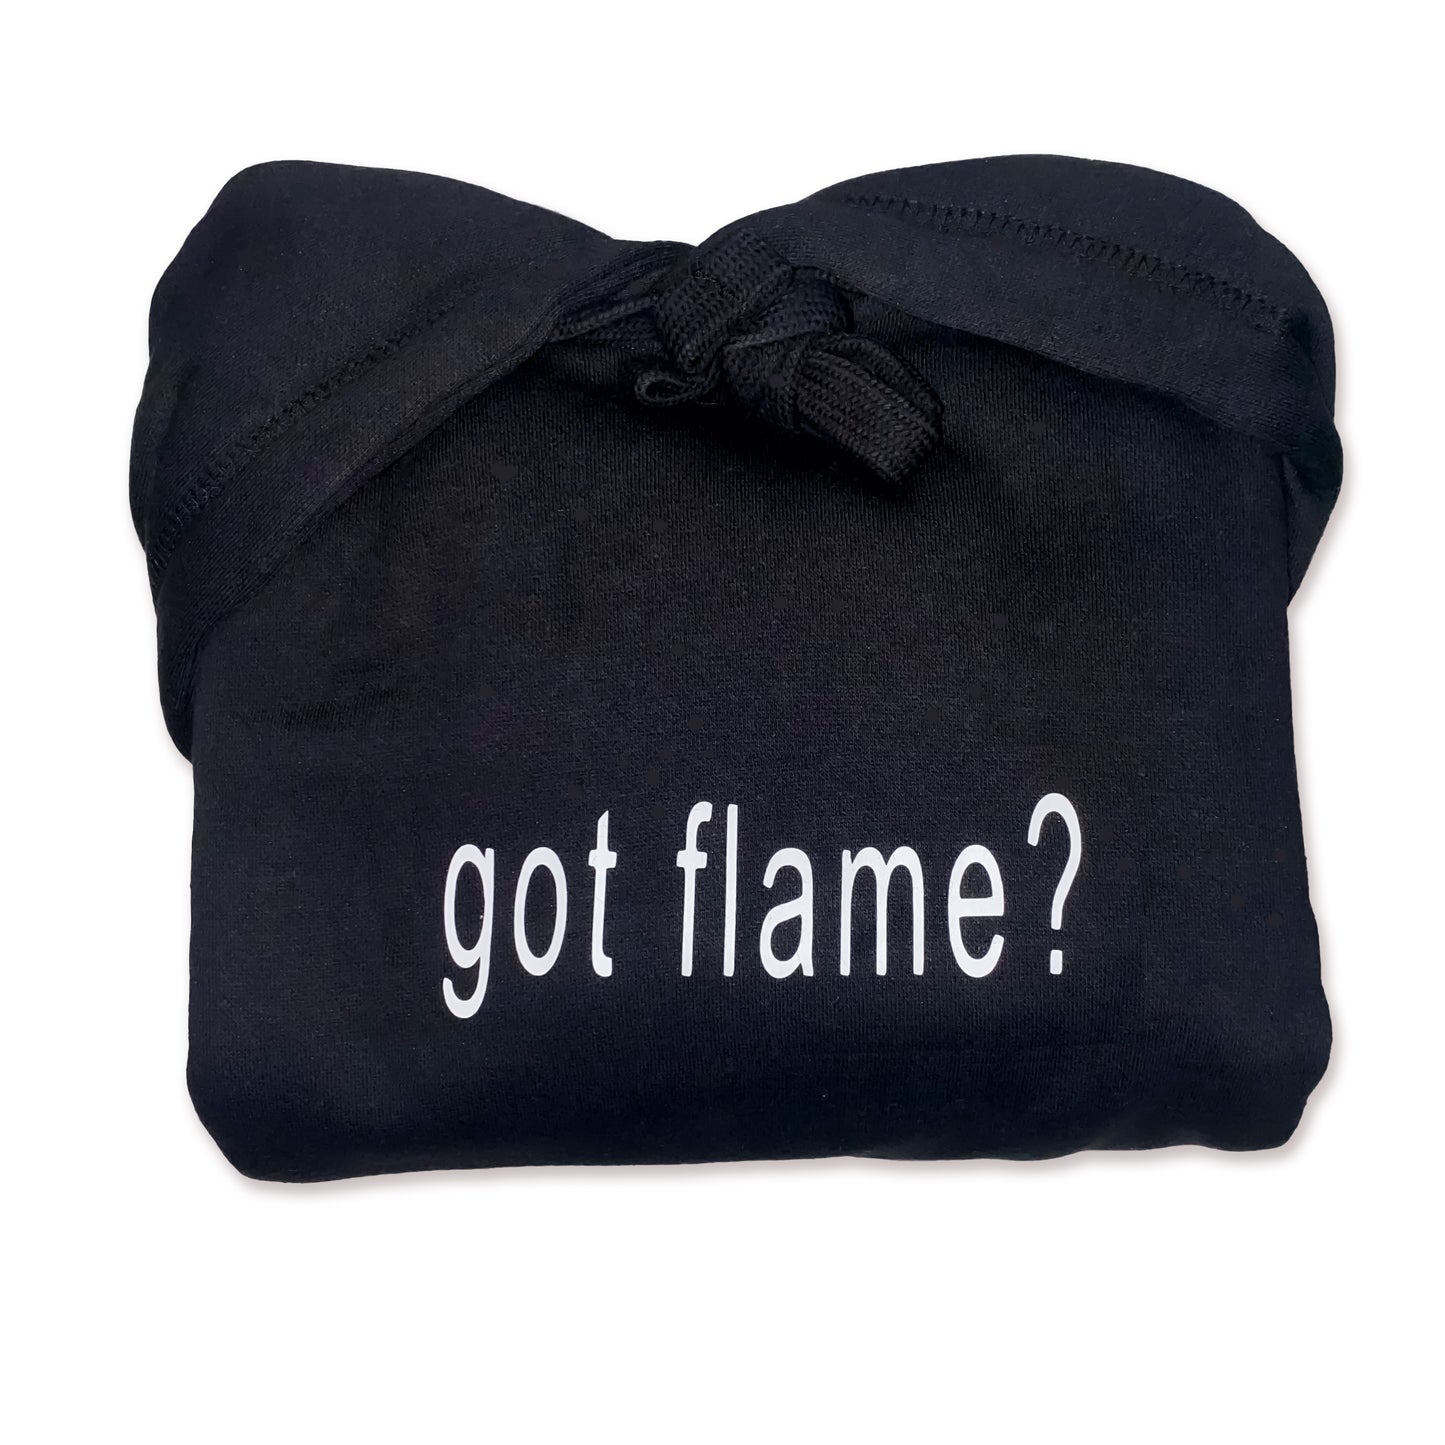 got flame? Hoodies